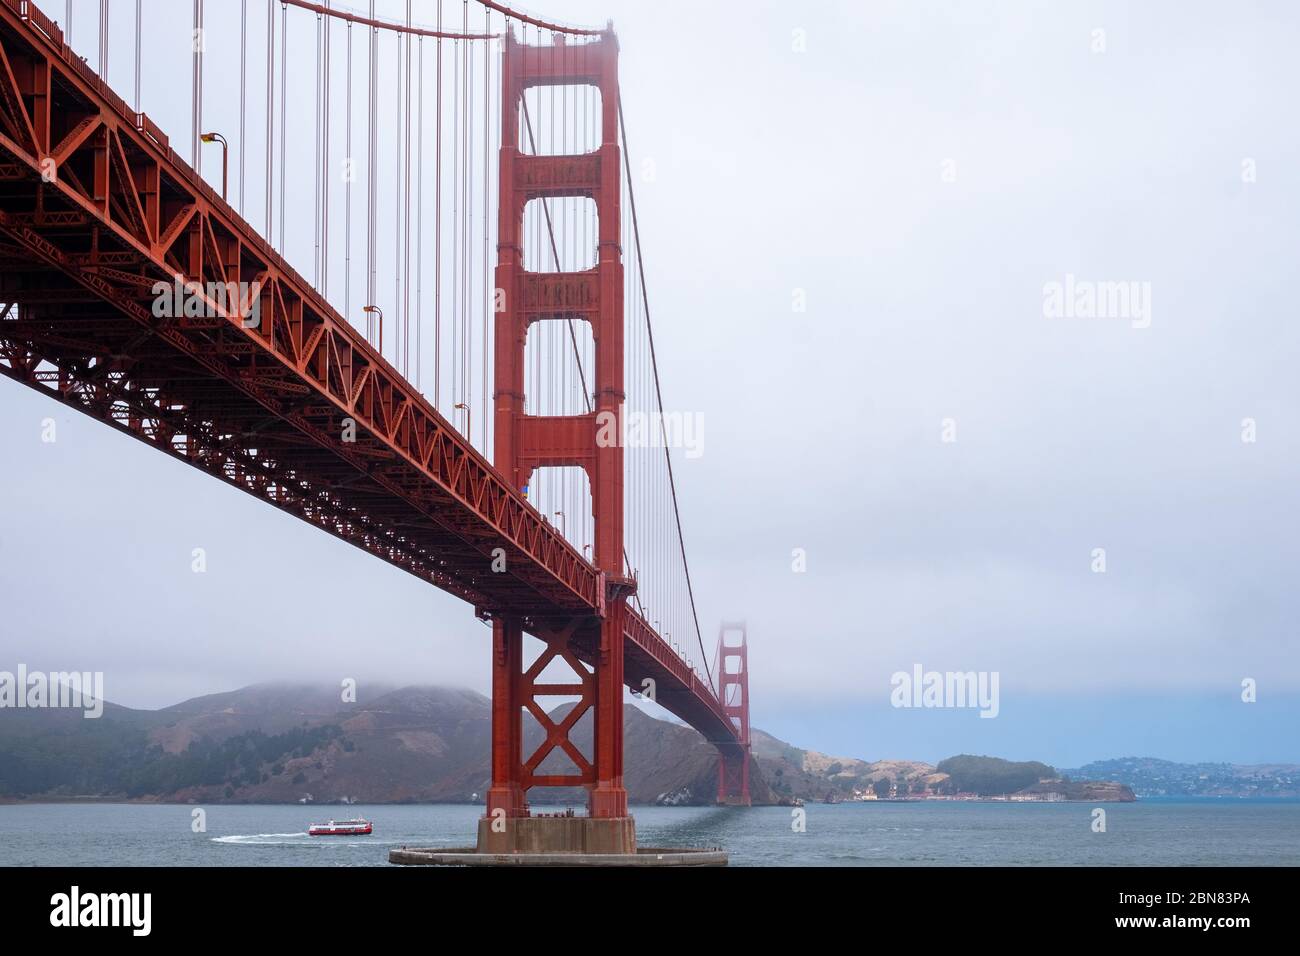 The famous and iconic Golden Gate Bridge in San Francisco, California taken from underneath about where Kim Novak stood in Vertigo Stock Photo